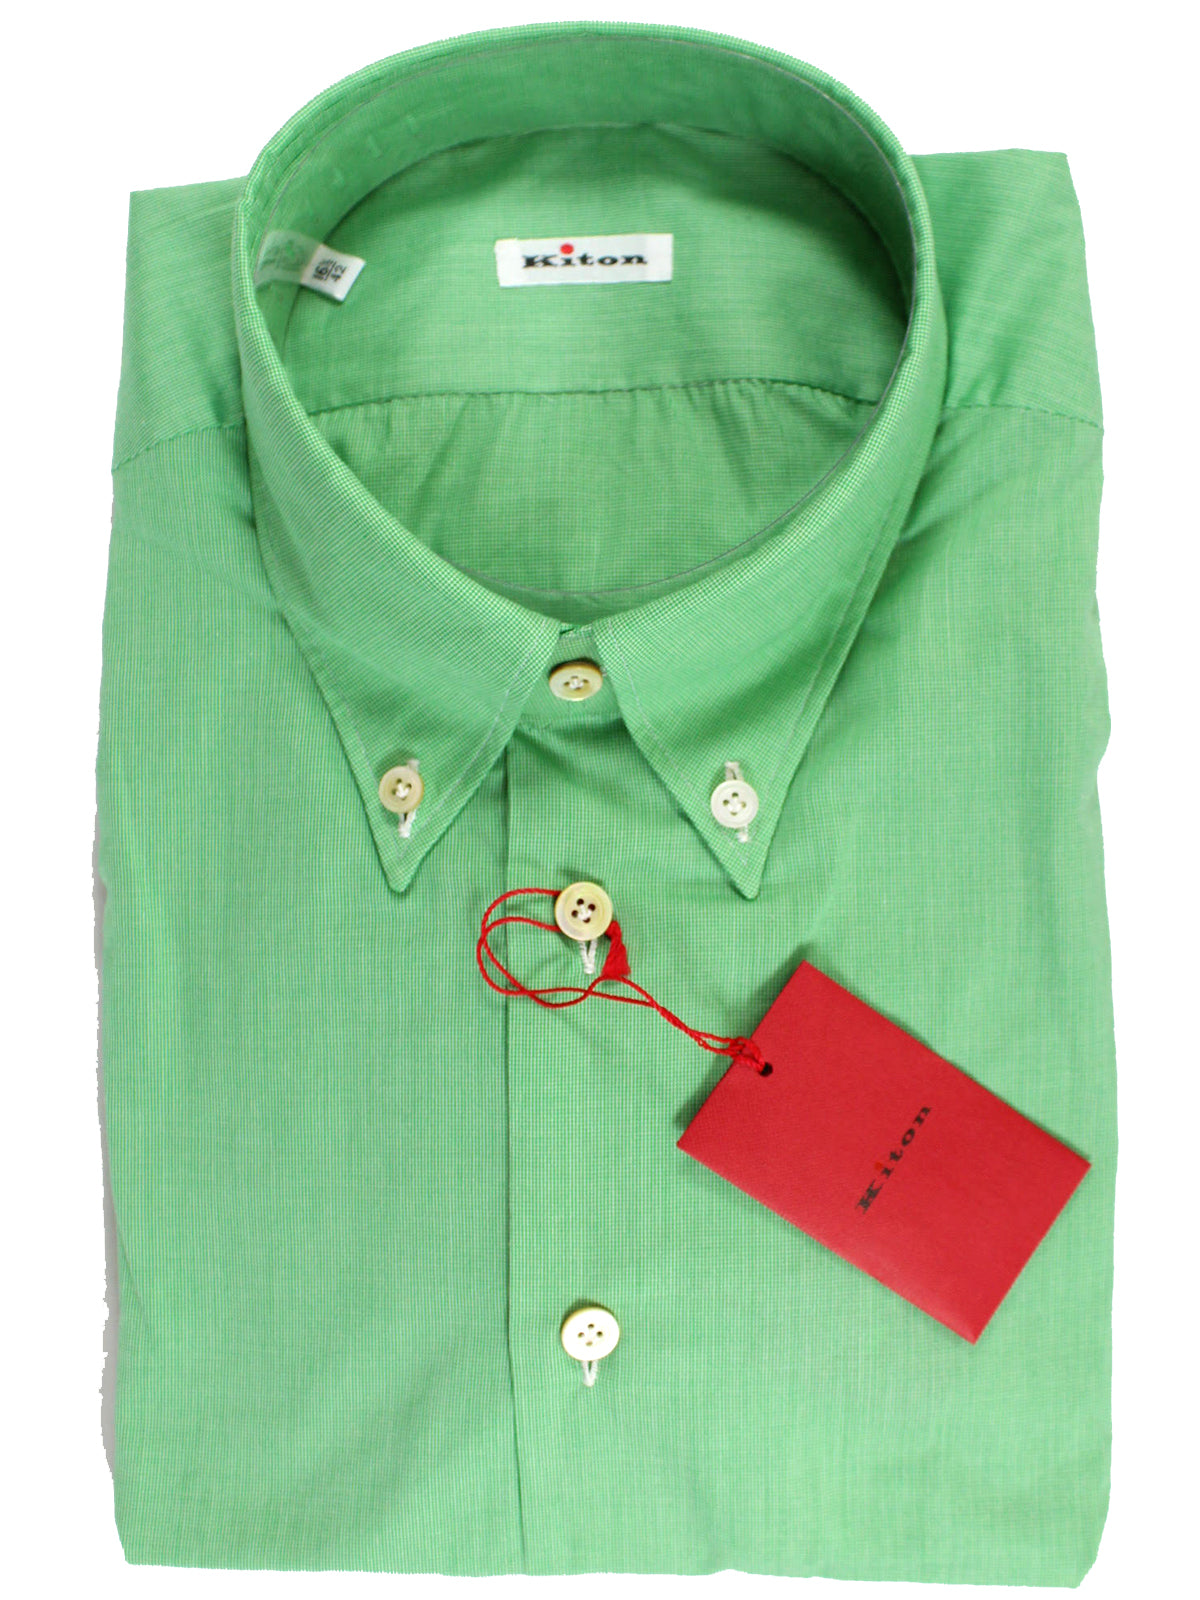 Kiton Dress Shirt Royal Green Solid Button Collar